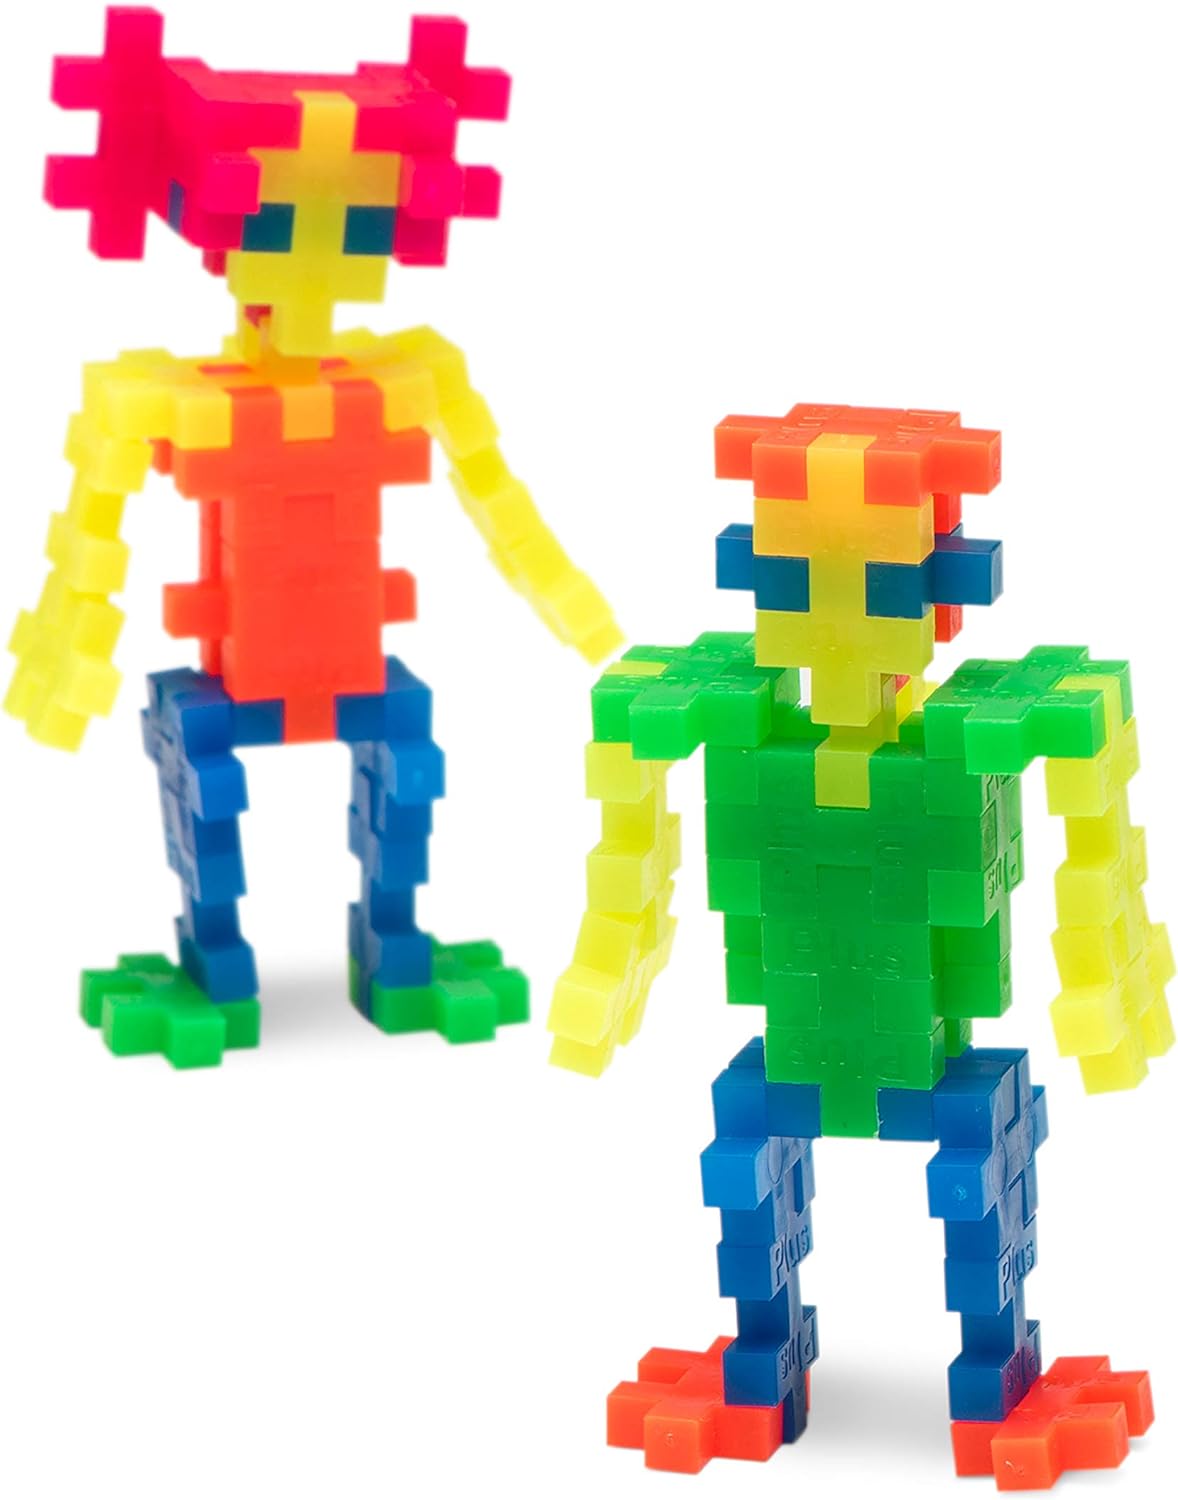 PLUS PLUS - Open Play Set - 7,000 Piece in Storage Tub - Basic, Neon, Pastel Color Mix - Construction Building Stem Toy, Interlocking Mini Puzzle Blocks for Kids